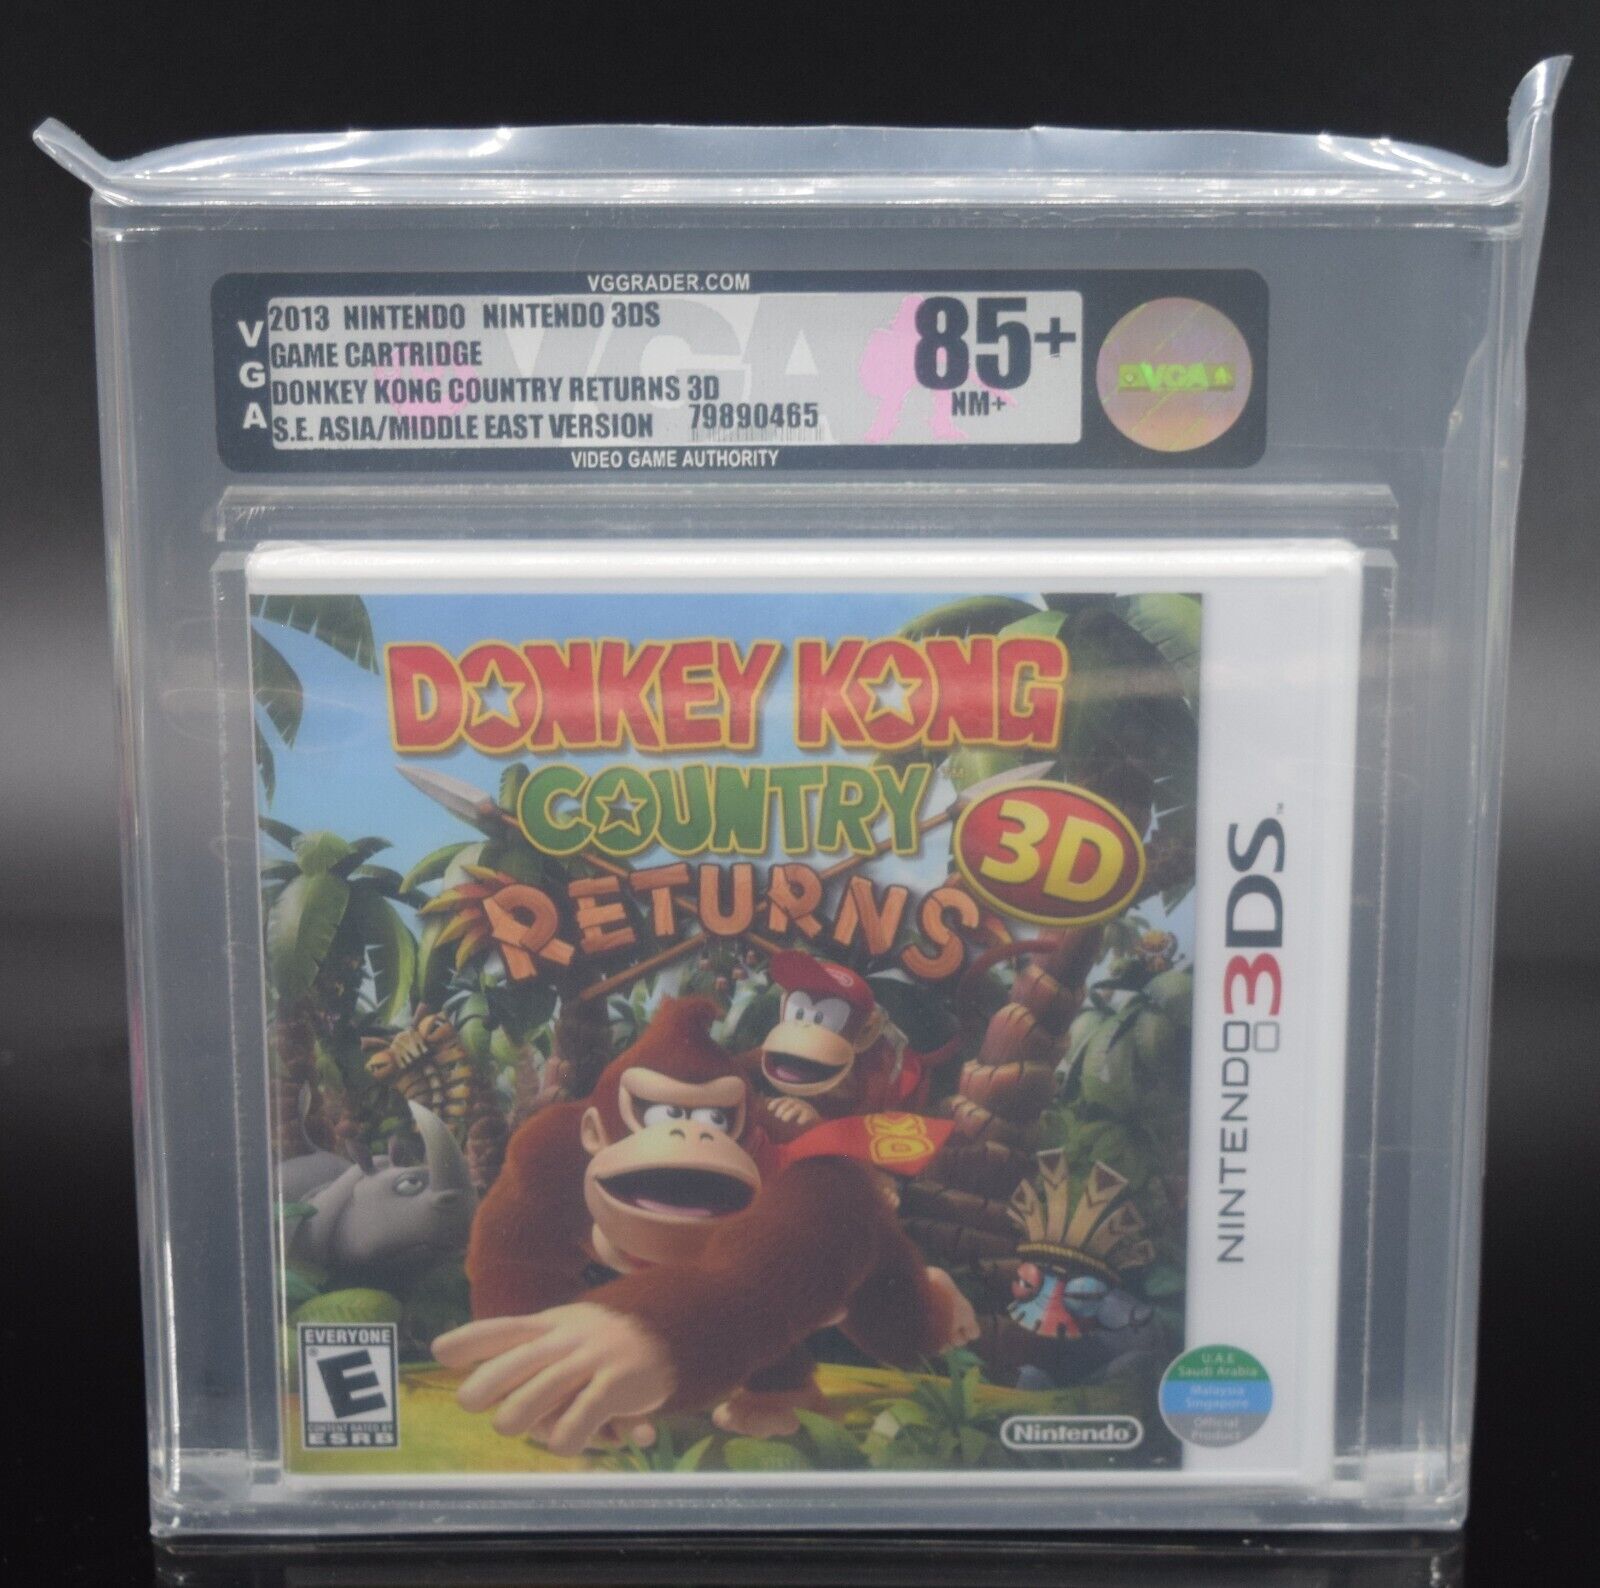 handling ånd spole VGA Graded 85+ Donkey Kong Country Returns 3D (Nintendo 3DS) Sealed NM+  Gold | eBay